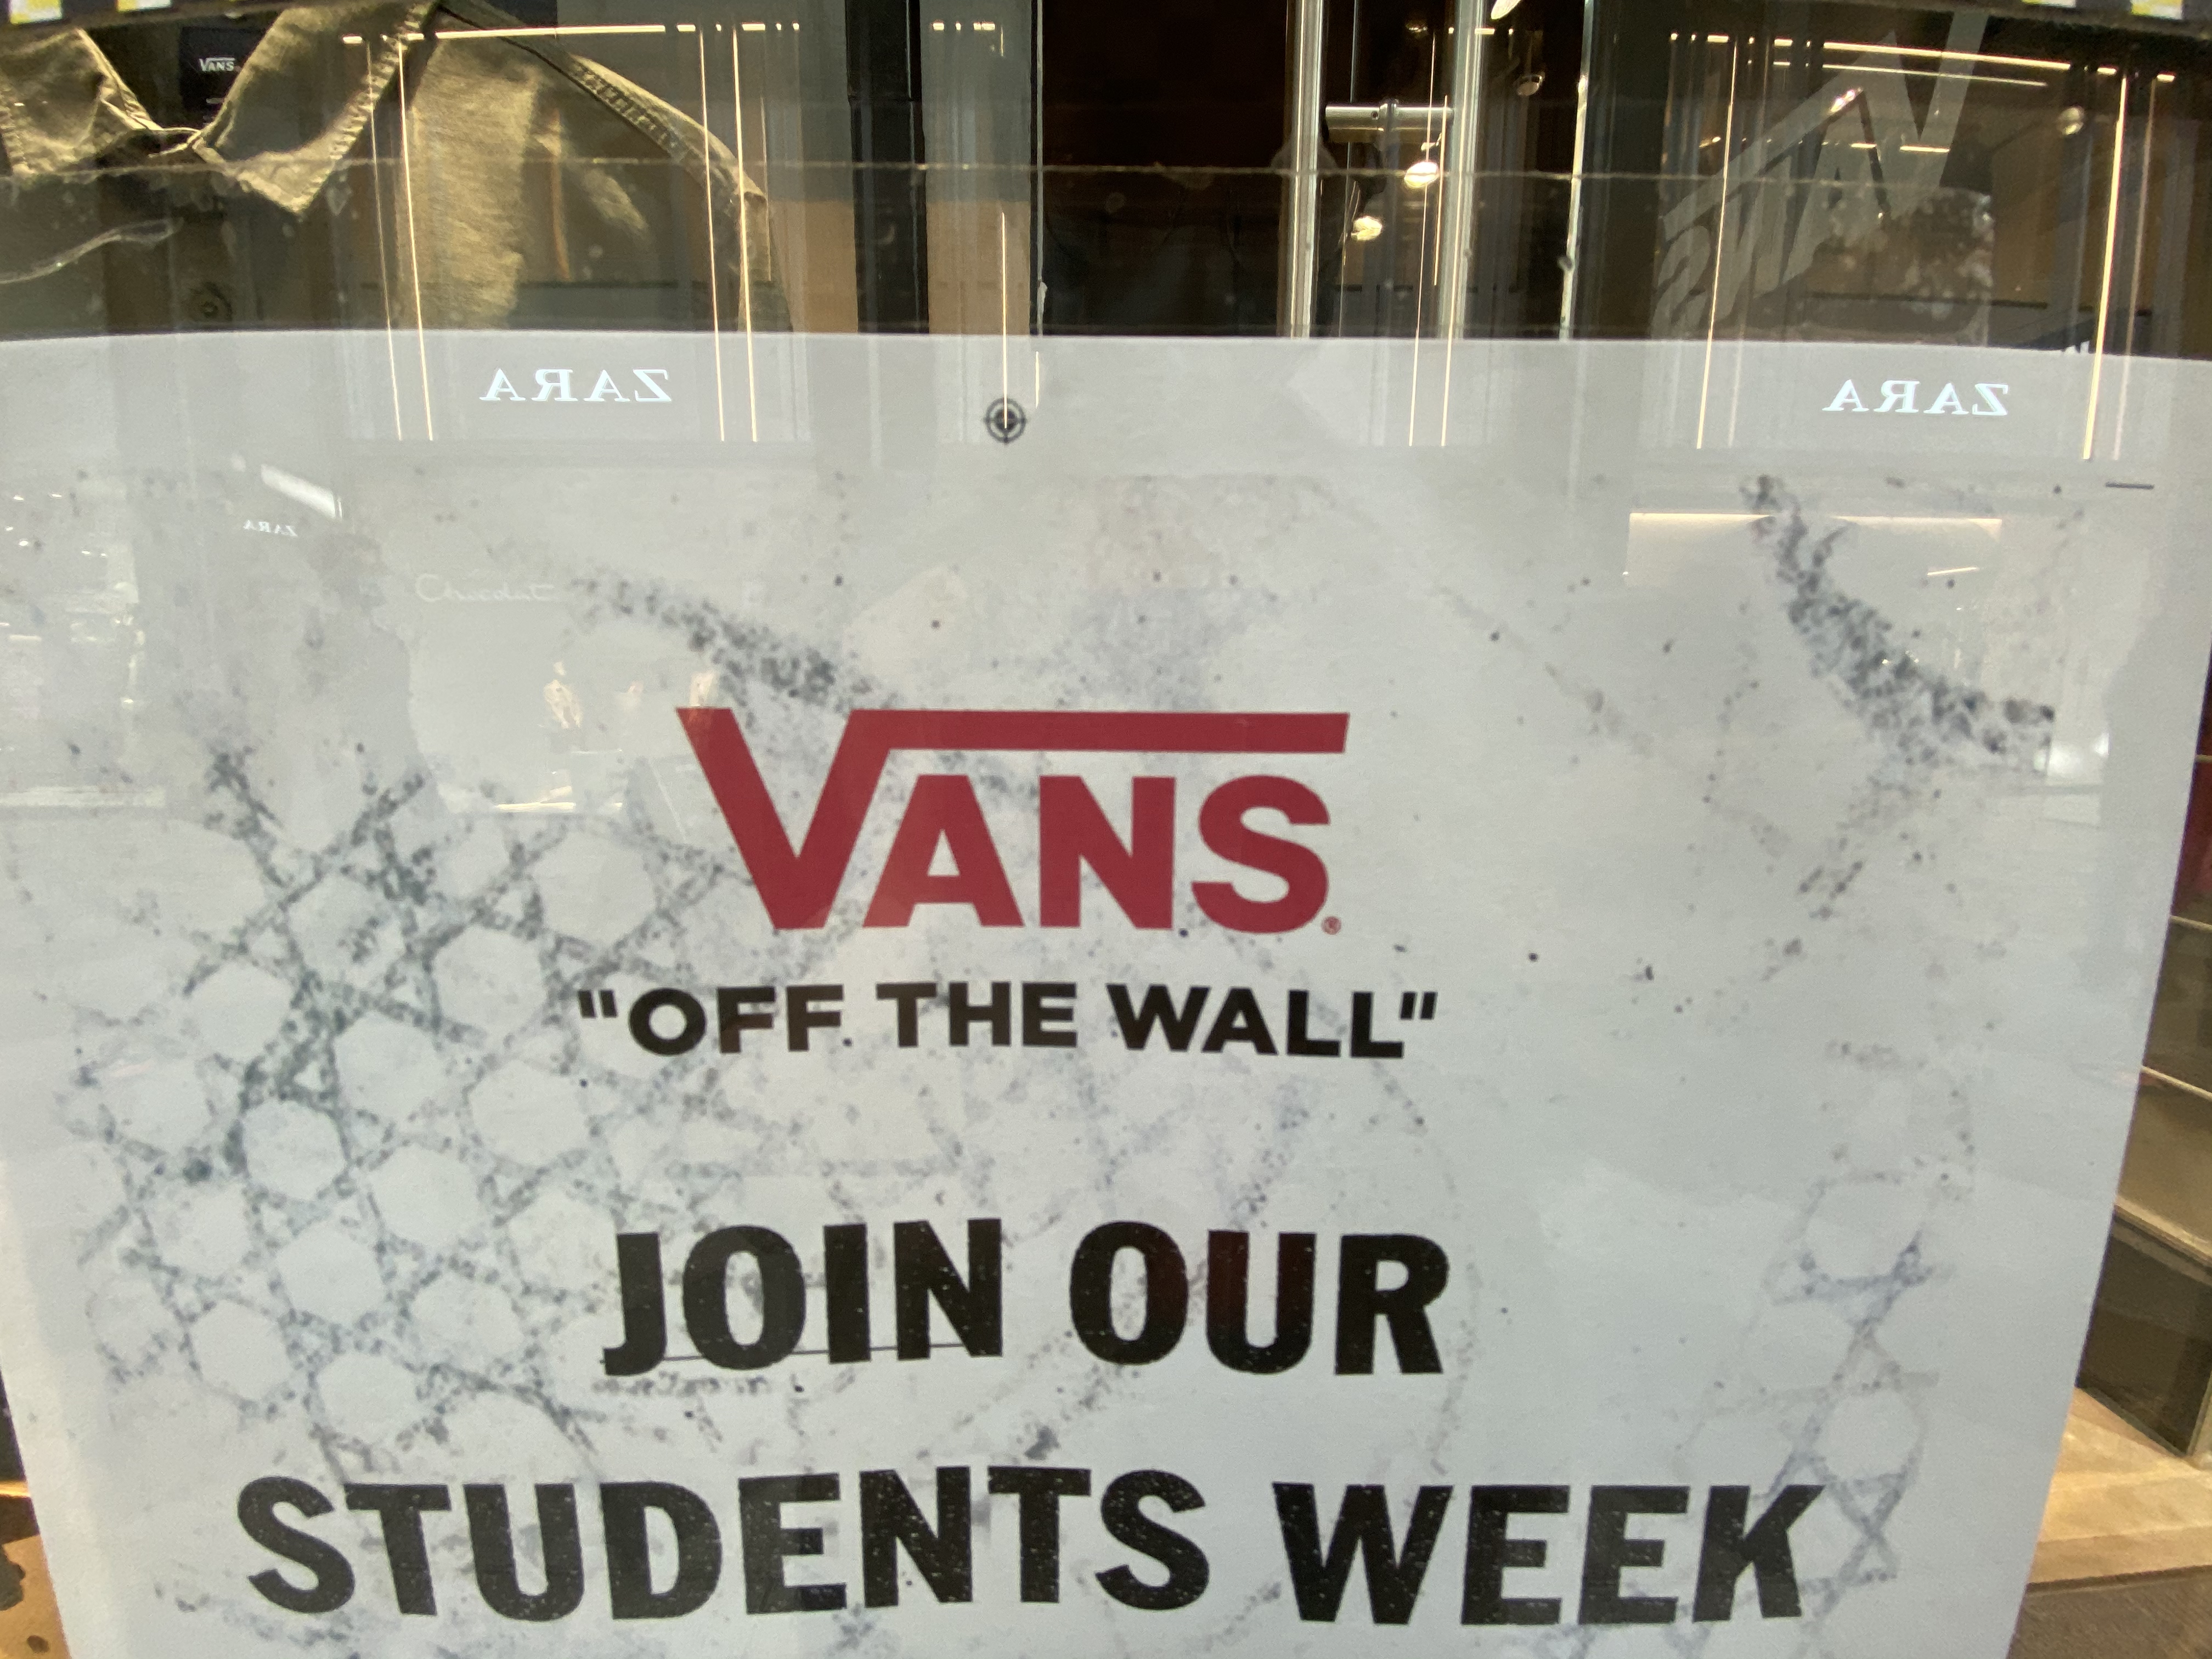 Recruitment Panflet at Vans Shop in Westgate, Oxford